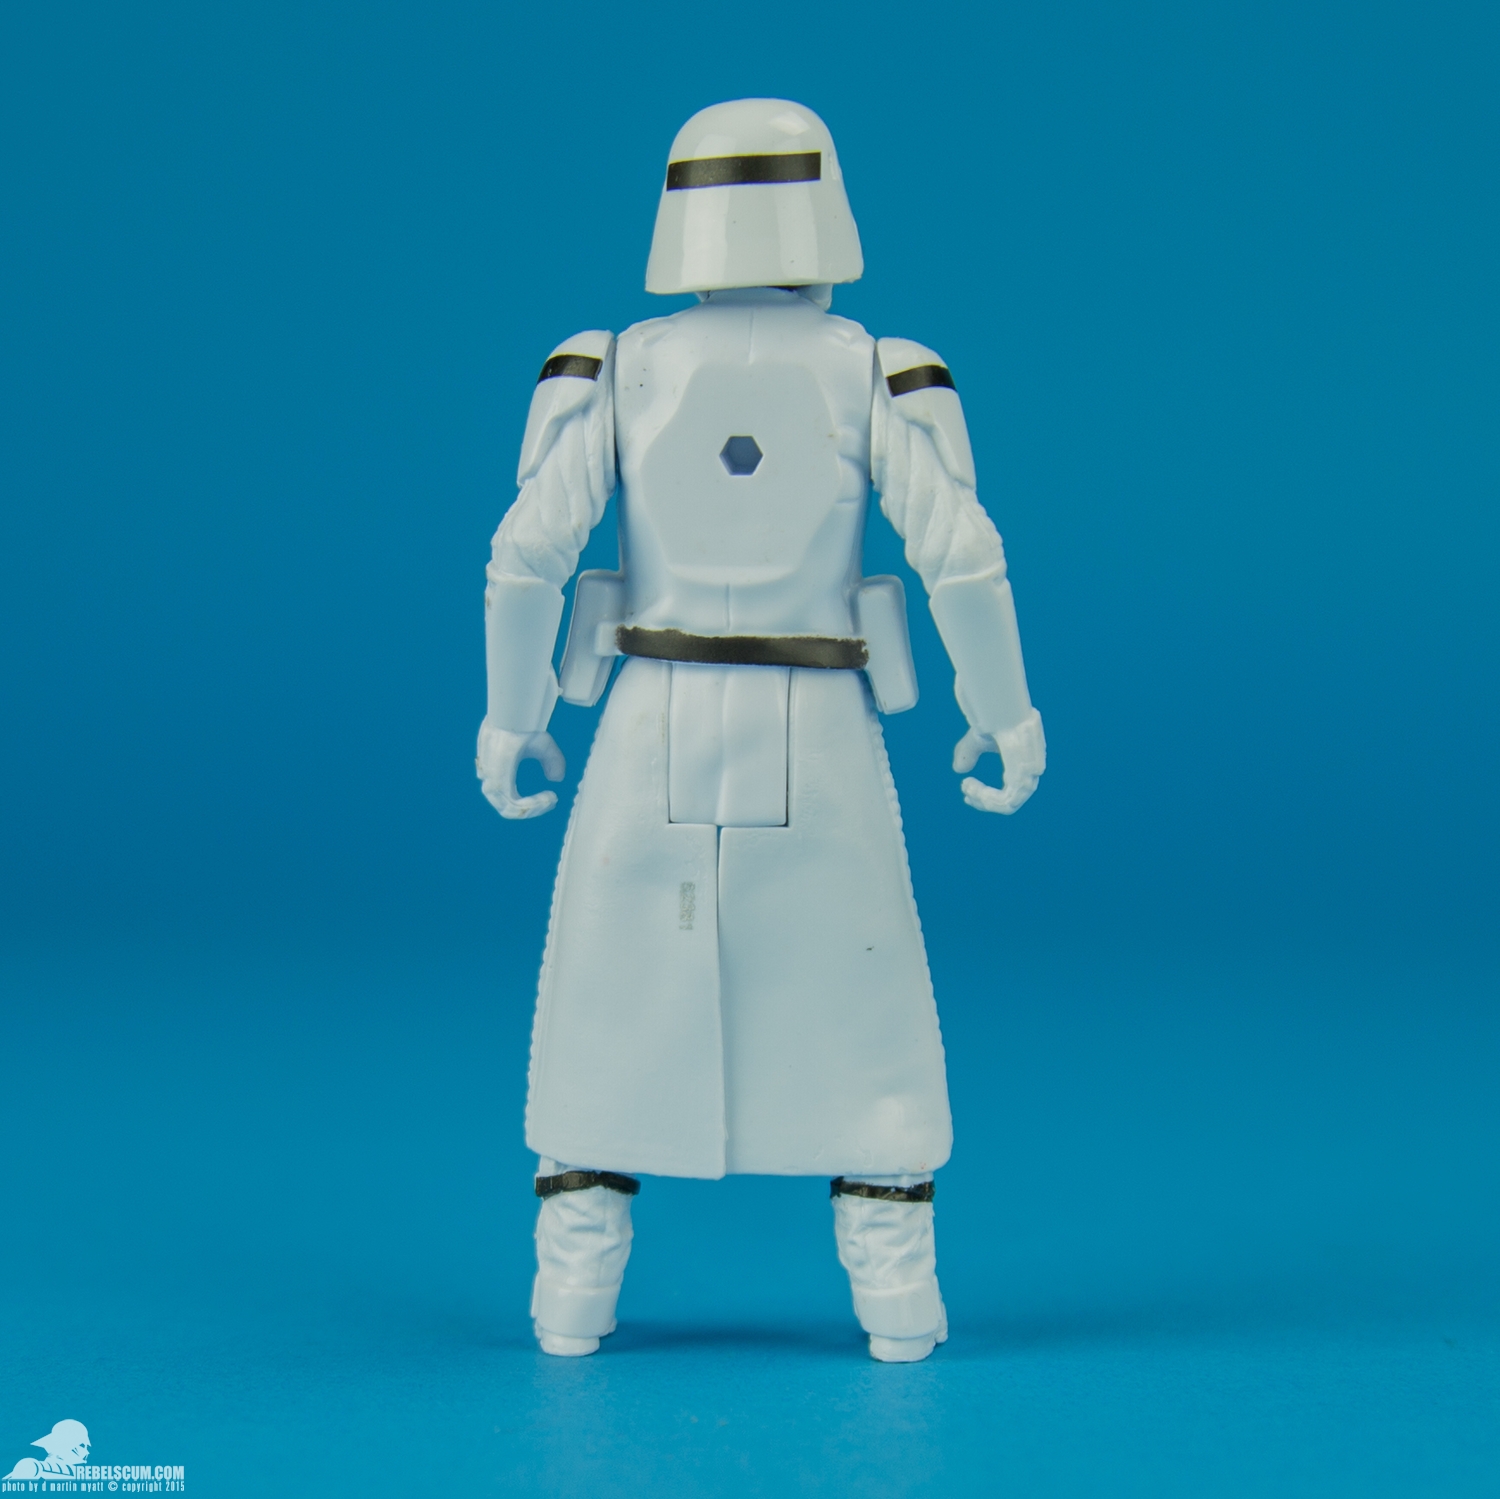 Fist-Order-Snowtrooper-The-Force-Awakens-Hasbro-004.jpg